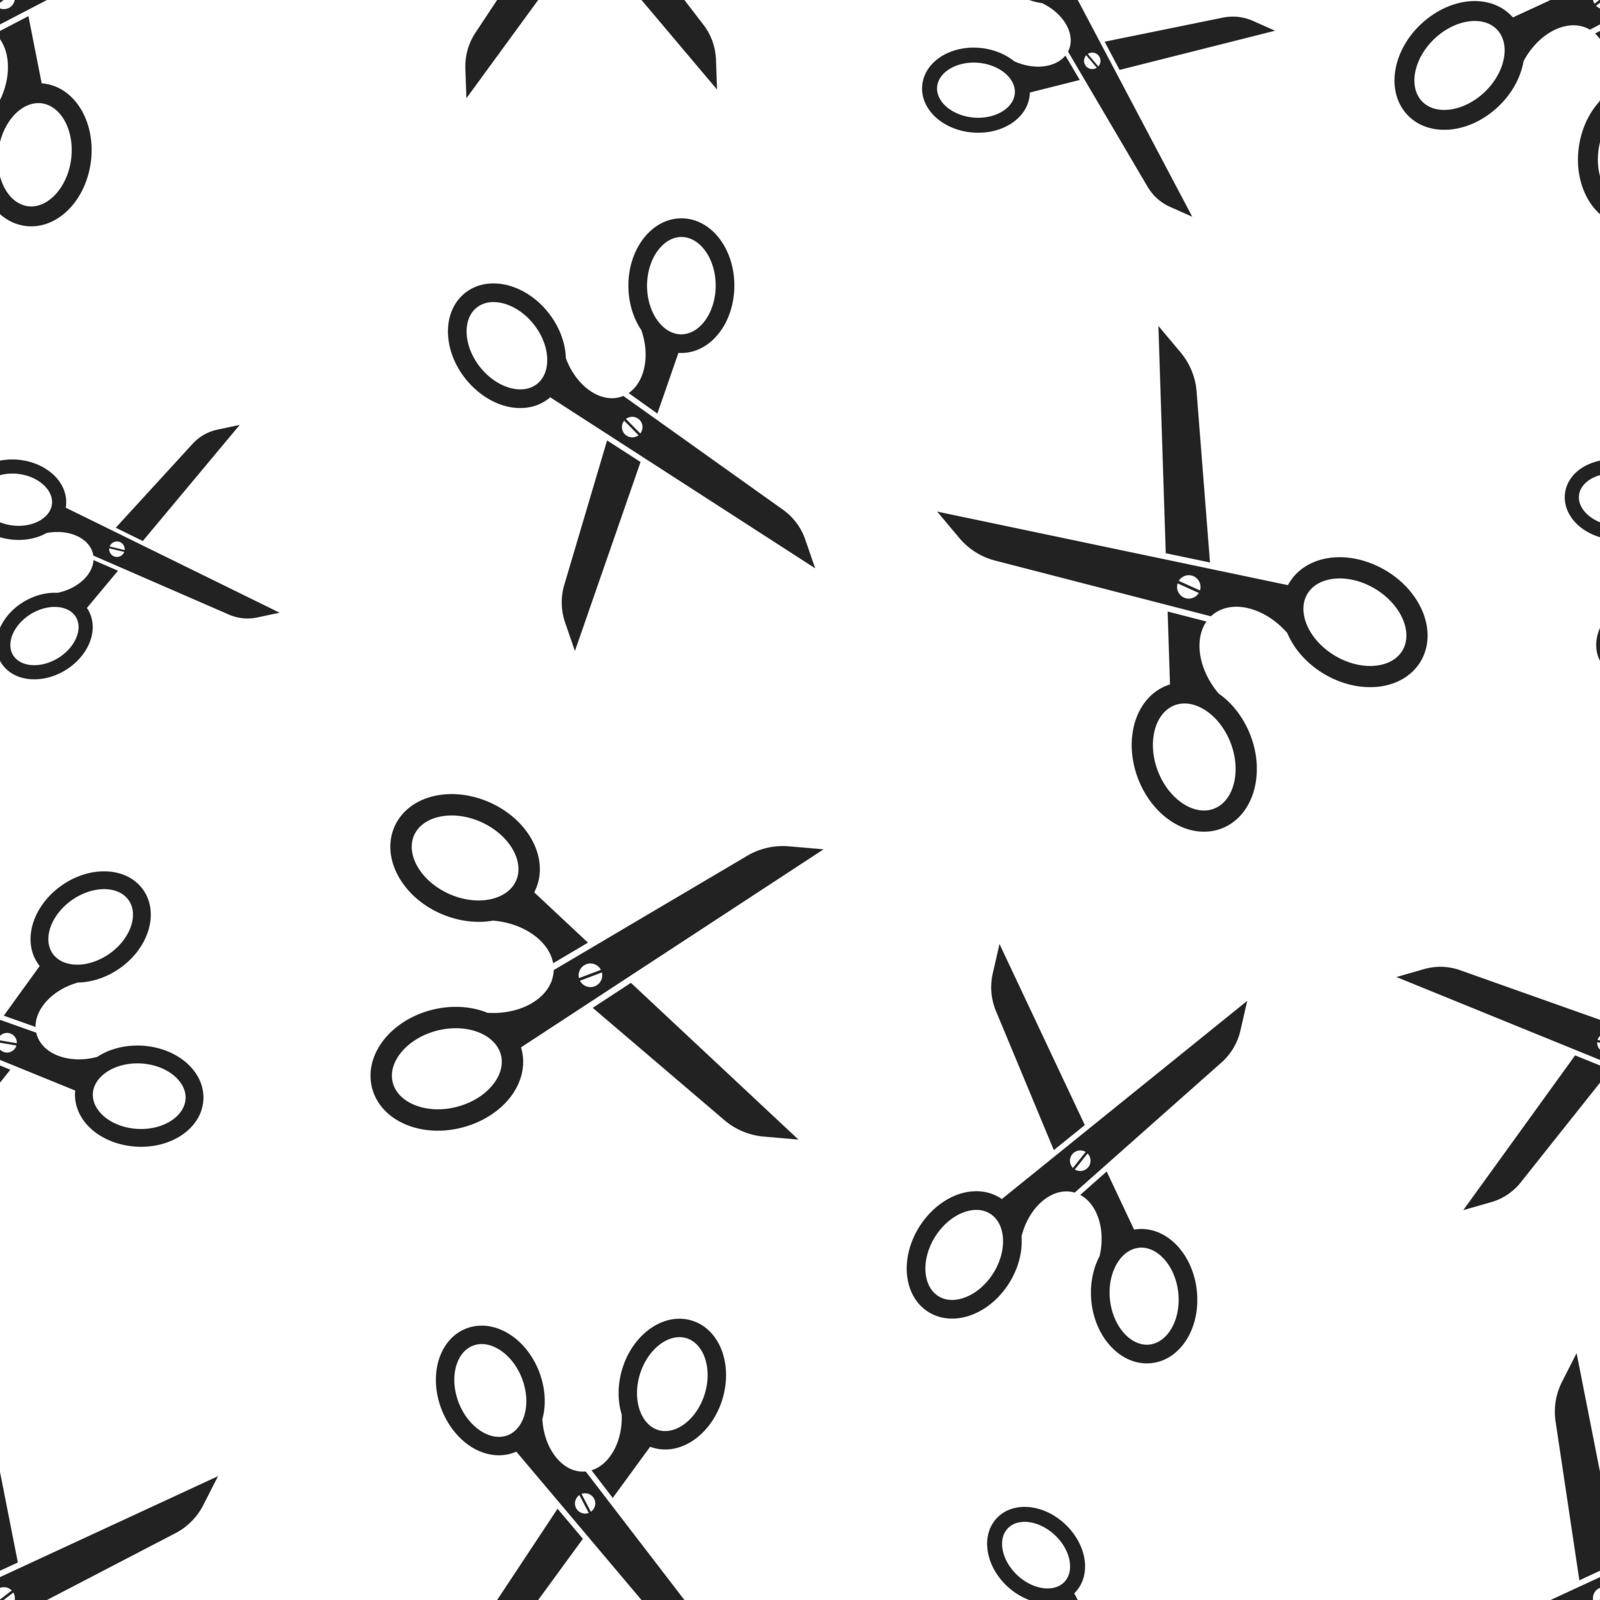 Scissors seamless pattern background. Business flat vector illustration. Scissor sign symbol pattern. by LysenkoA